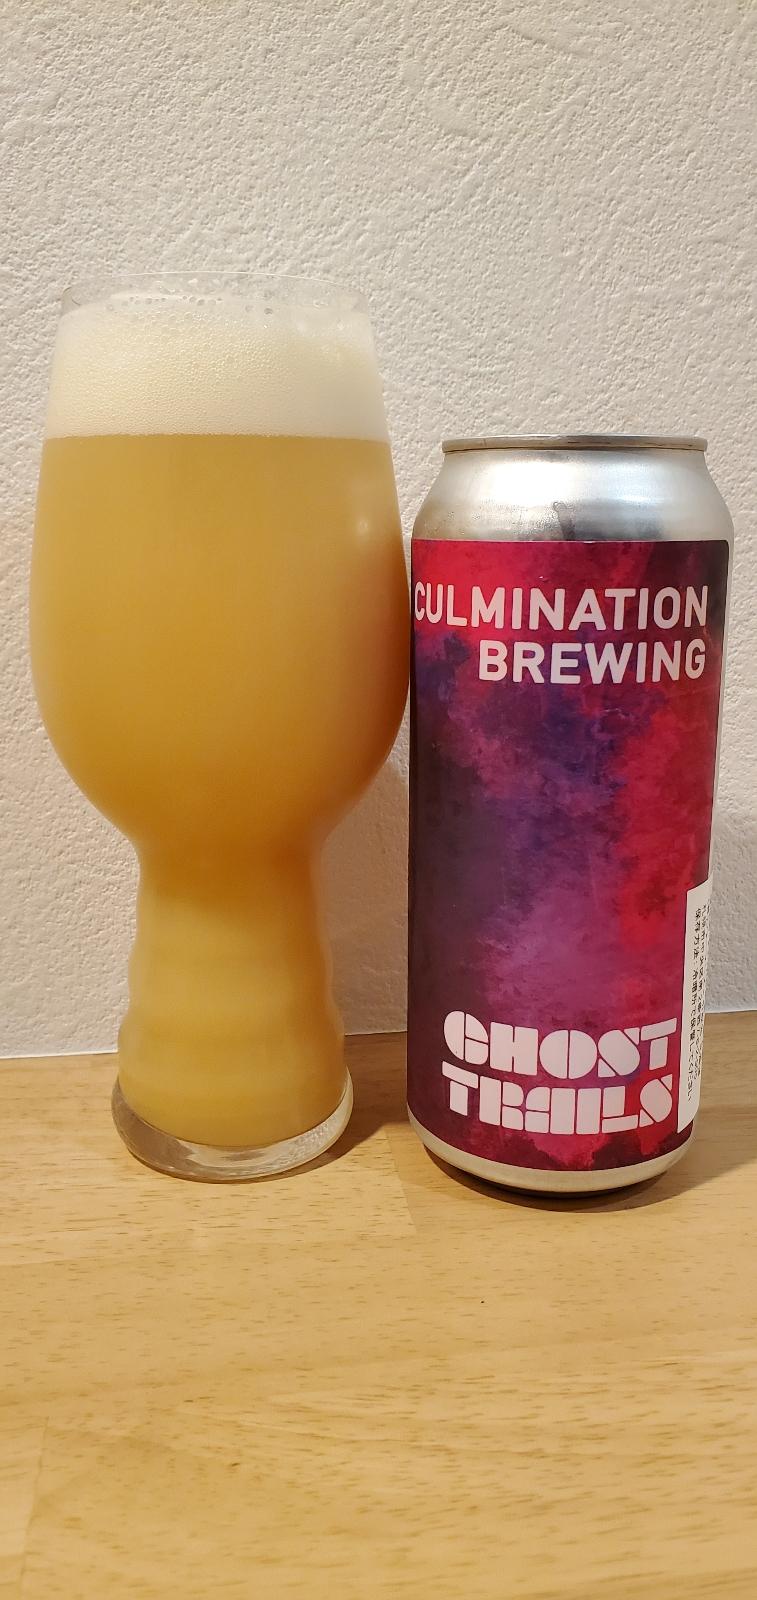 Ghost Trails Hazy IPA